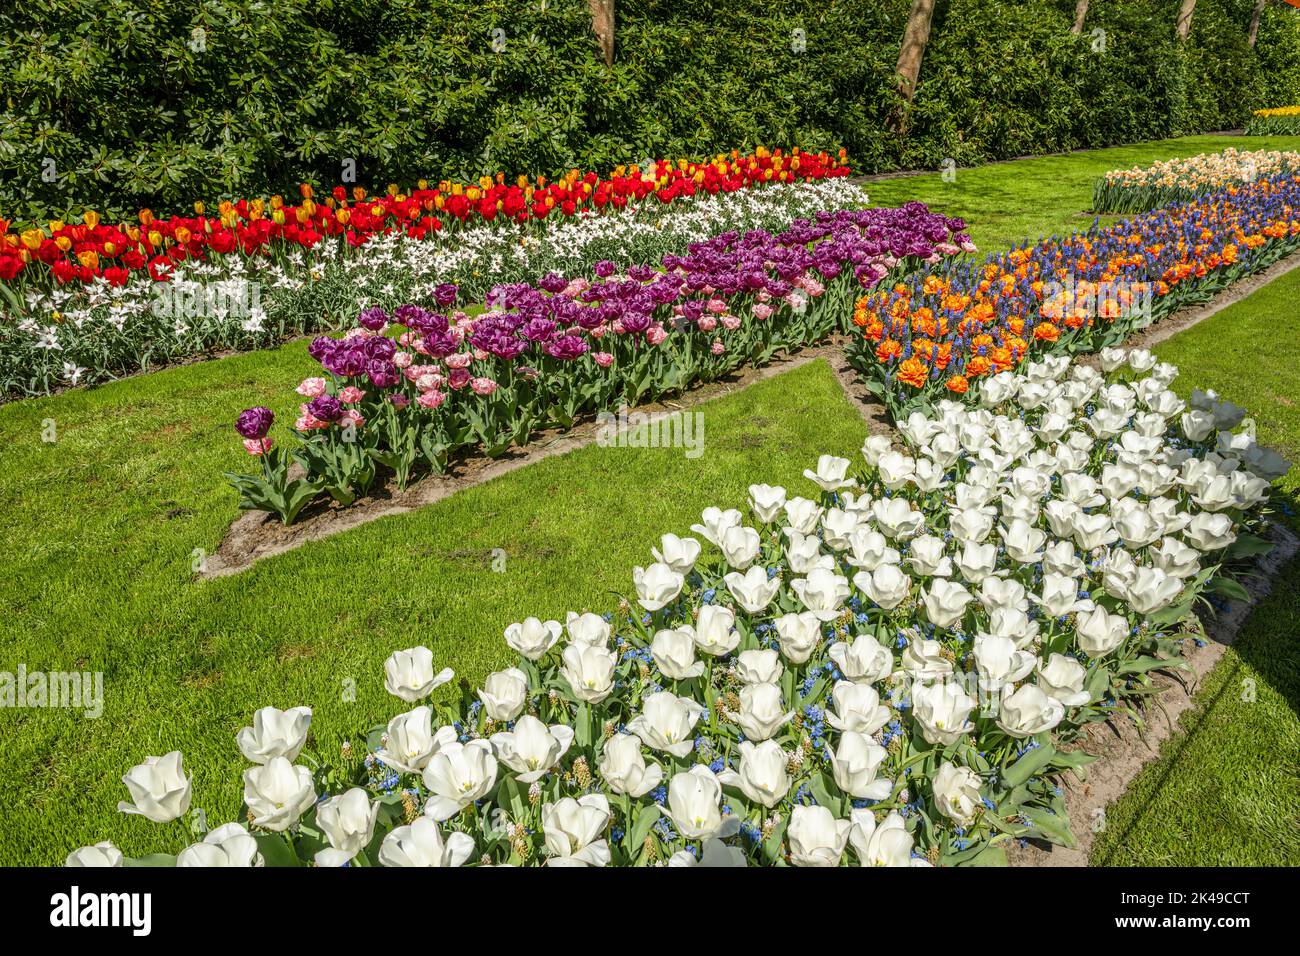 Tulips at Keukenhof Gardens Stock Photo